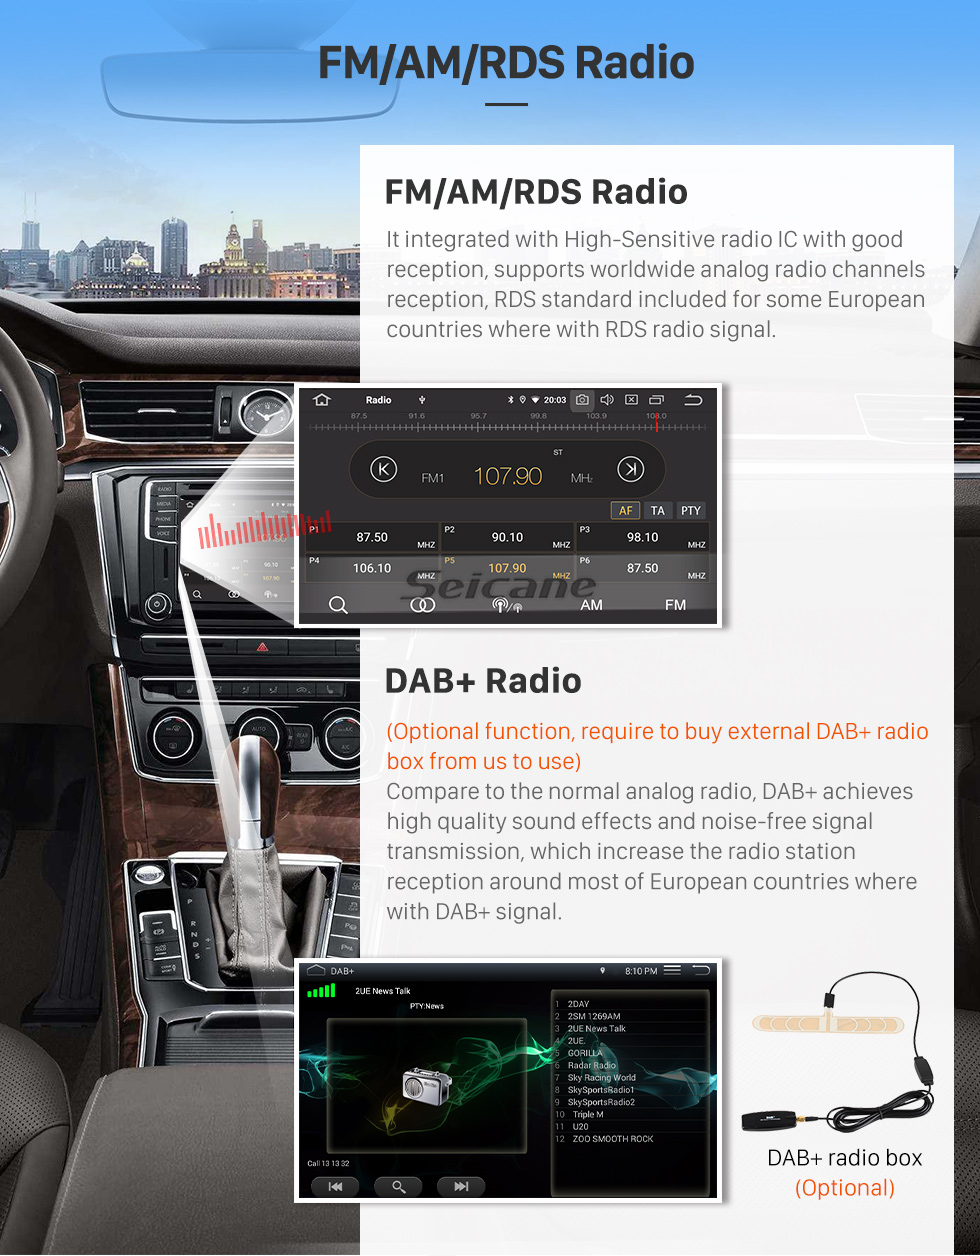 Seicane Carplay 9 polegadas HD Touchscreen Android 12.0 para 2013 2014-2016 BUCK ENCORE OPEL MOKKA Navegação GPS Android Auto Head Unit Suporte DAB + OBDII WiFi Controle do Volante